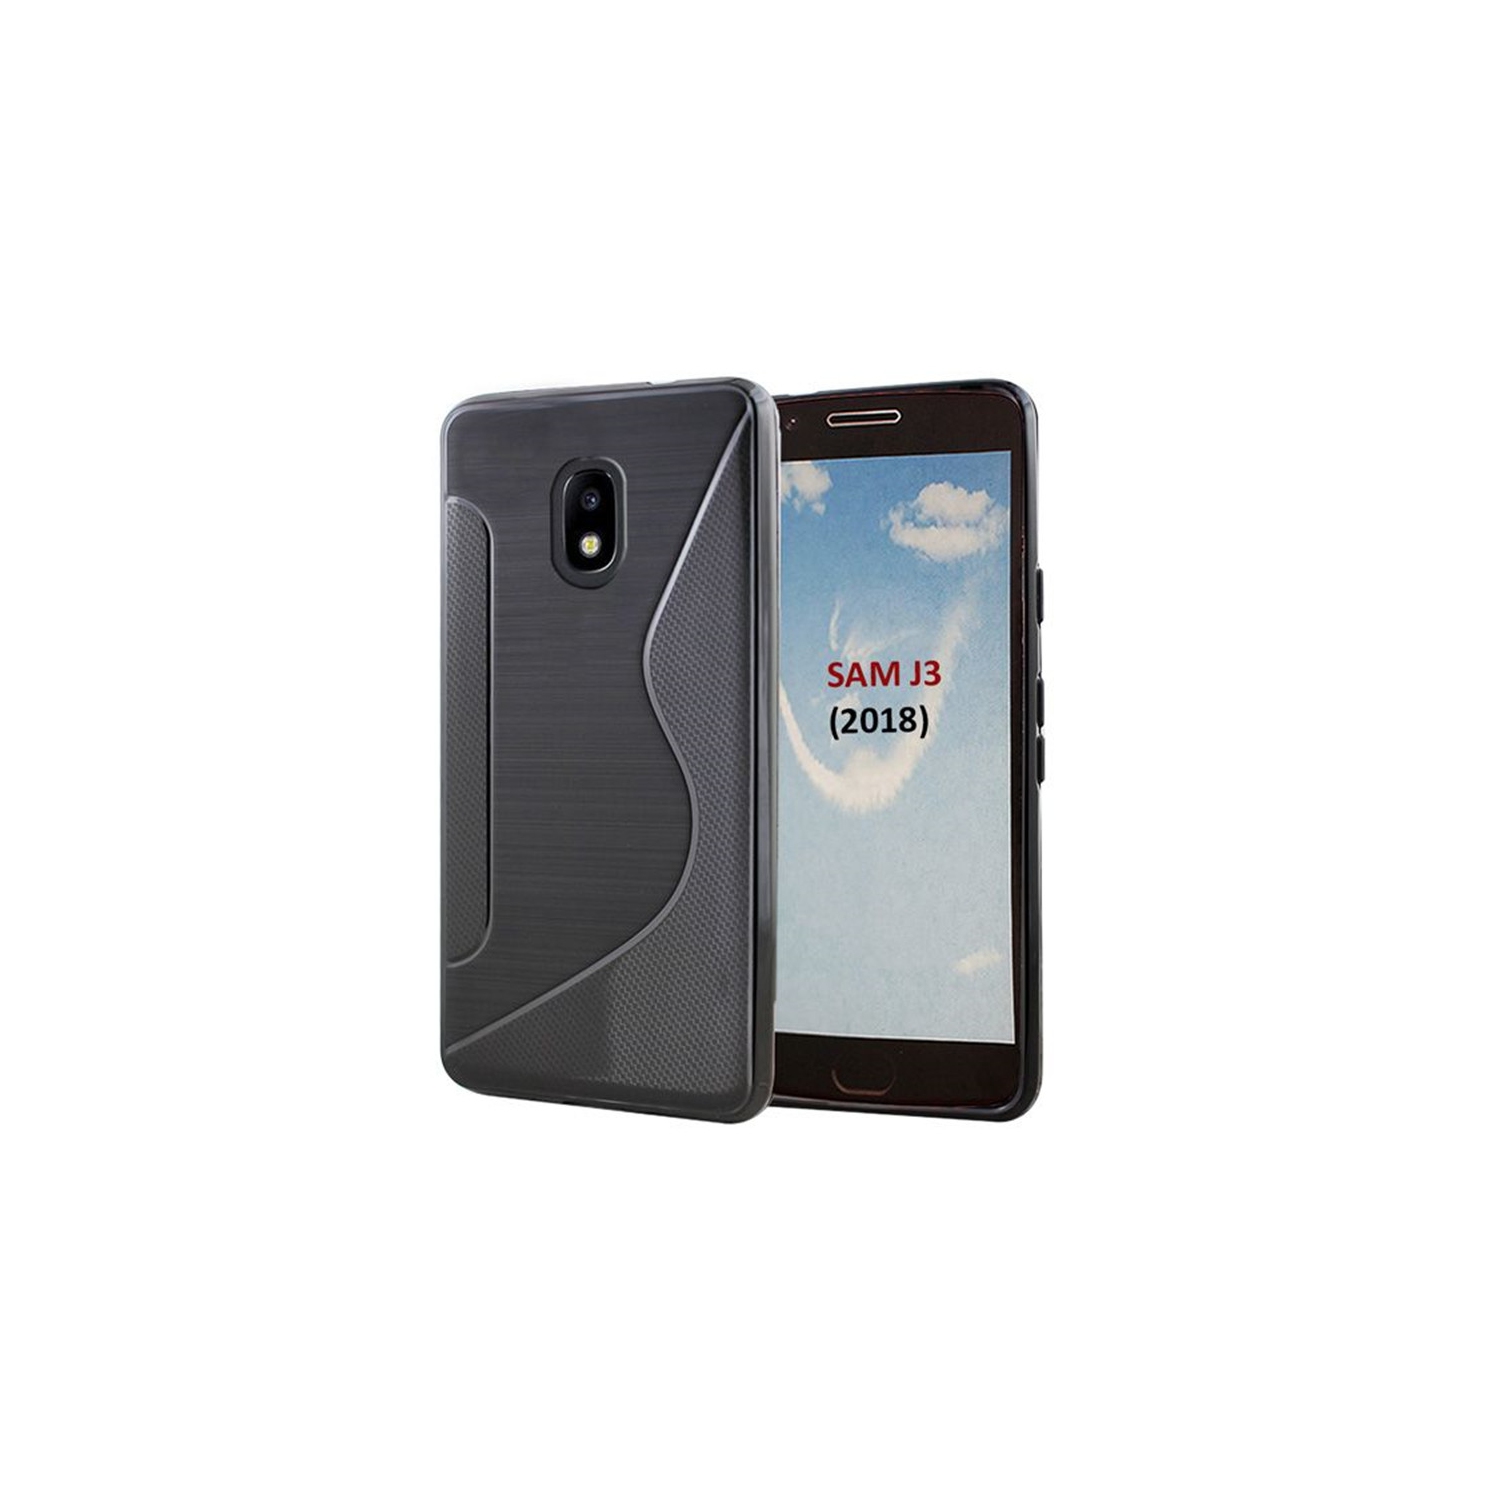 【CSmart】 Ultra Thin Soft TPU Silicone Jelly Bumper Back Cover Case for Samsung Galaxy J3 2018, Black